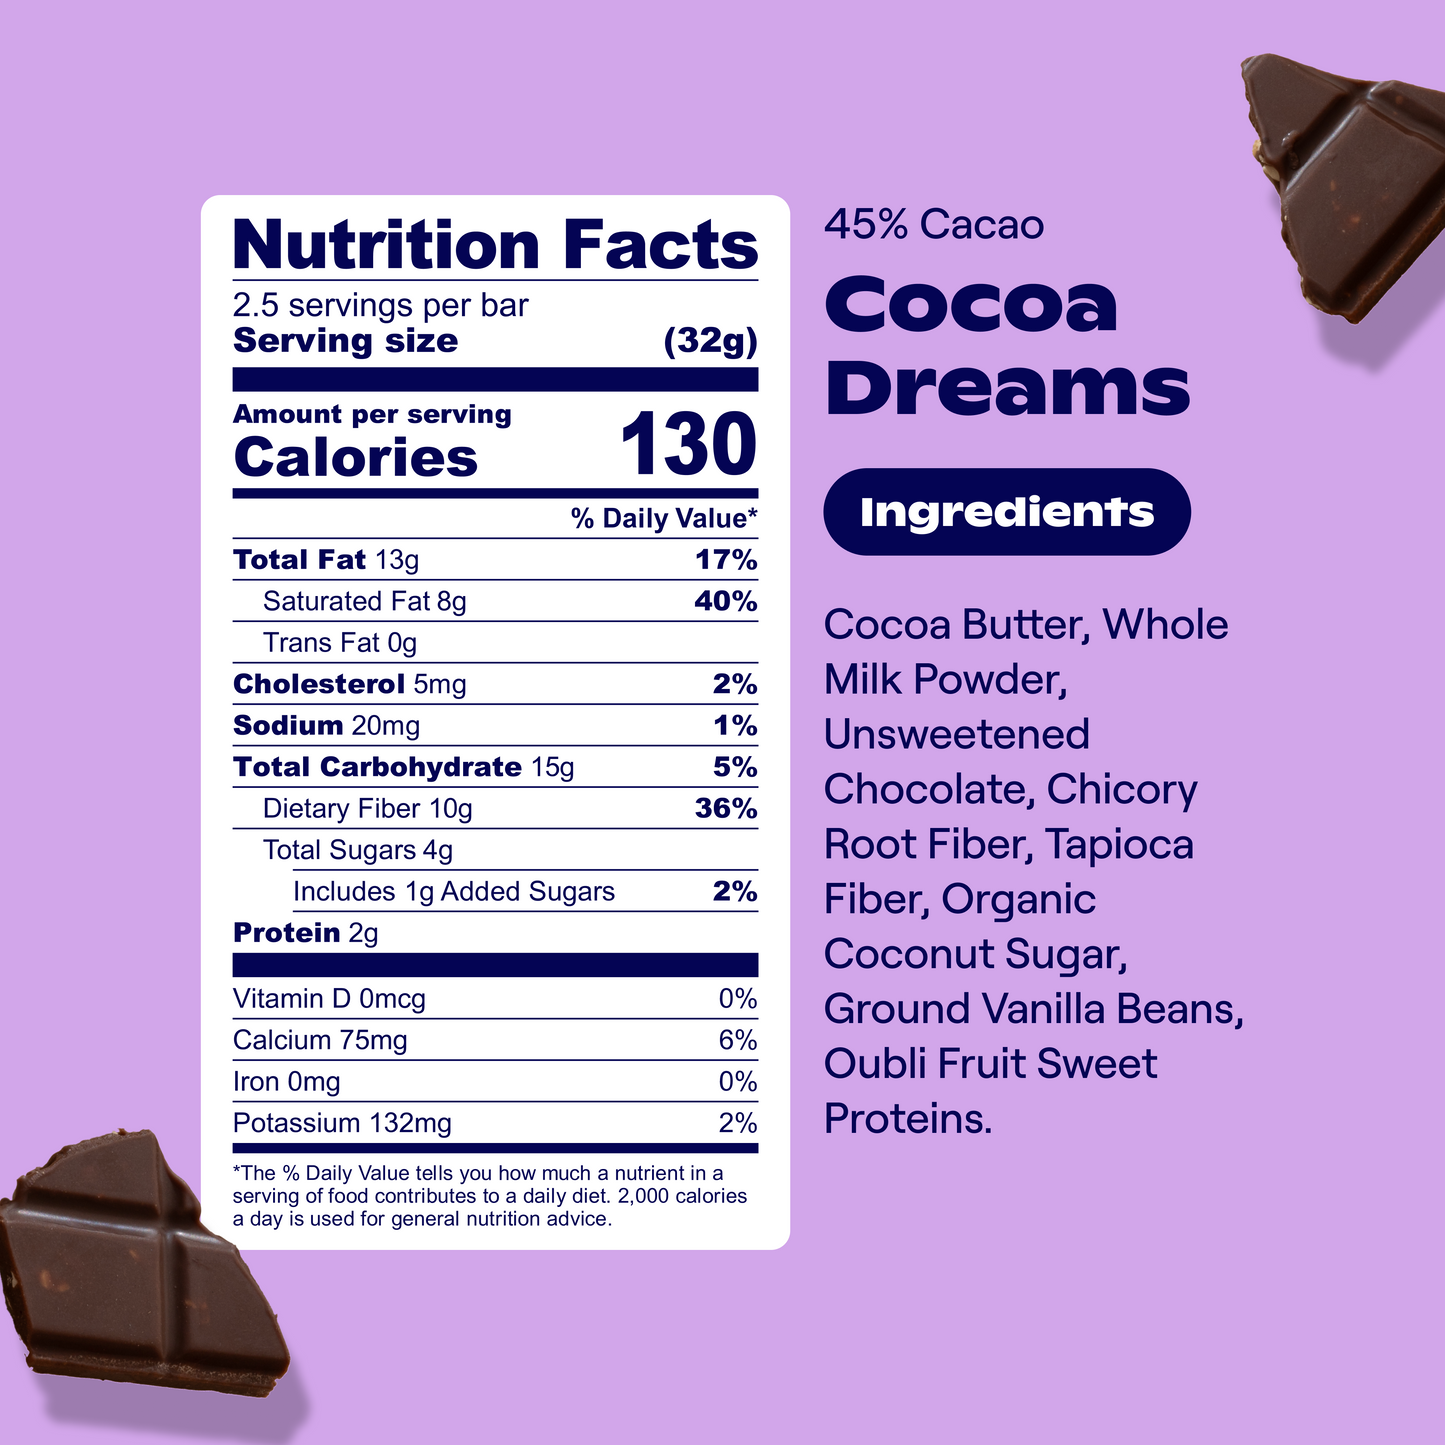 Cocoa dreams milk chocolate bars (12 pack)